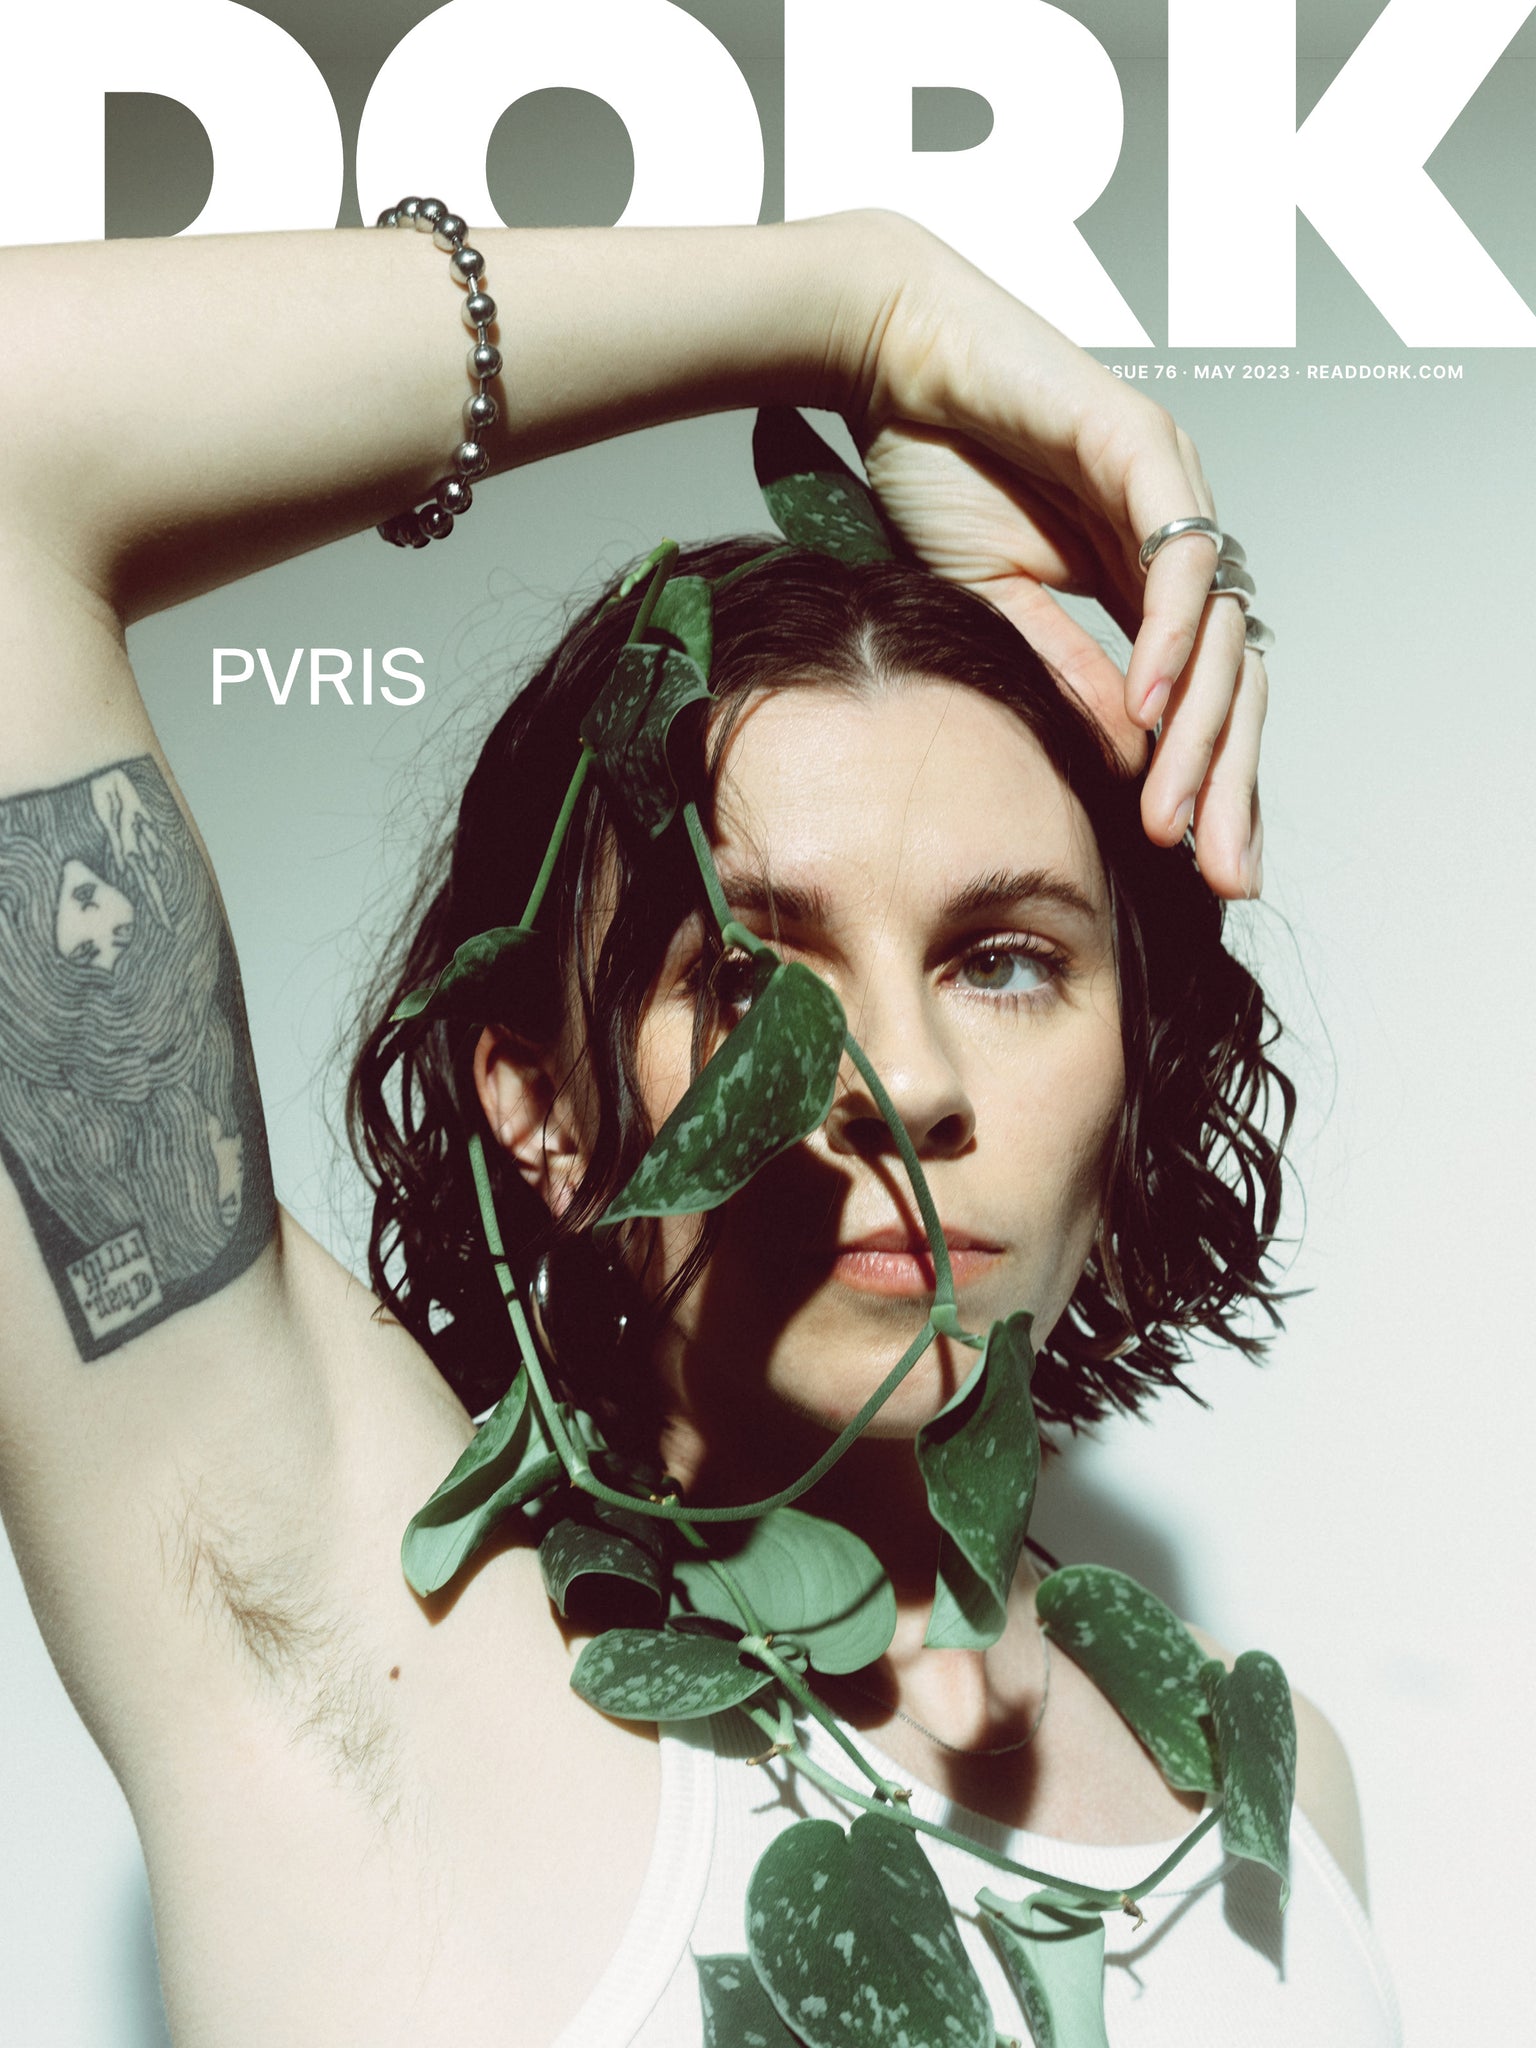 Dork, May 2023 (PVRIS cover)